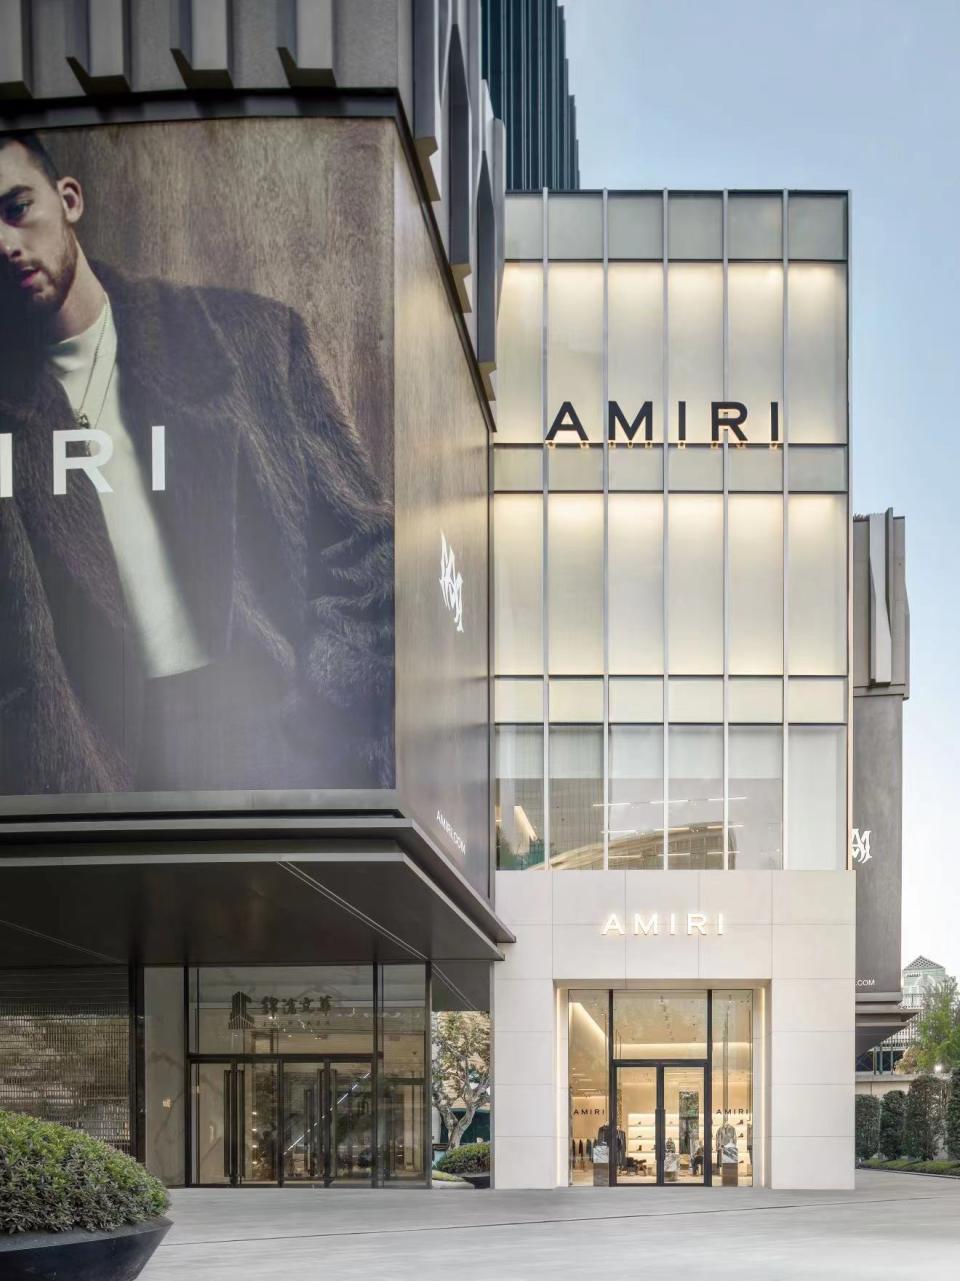 The Amiri store in Shanghai. - Credit: Courtesy